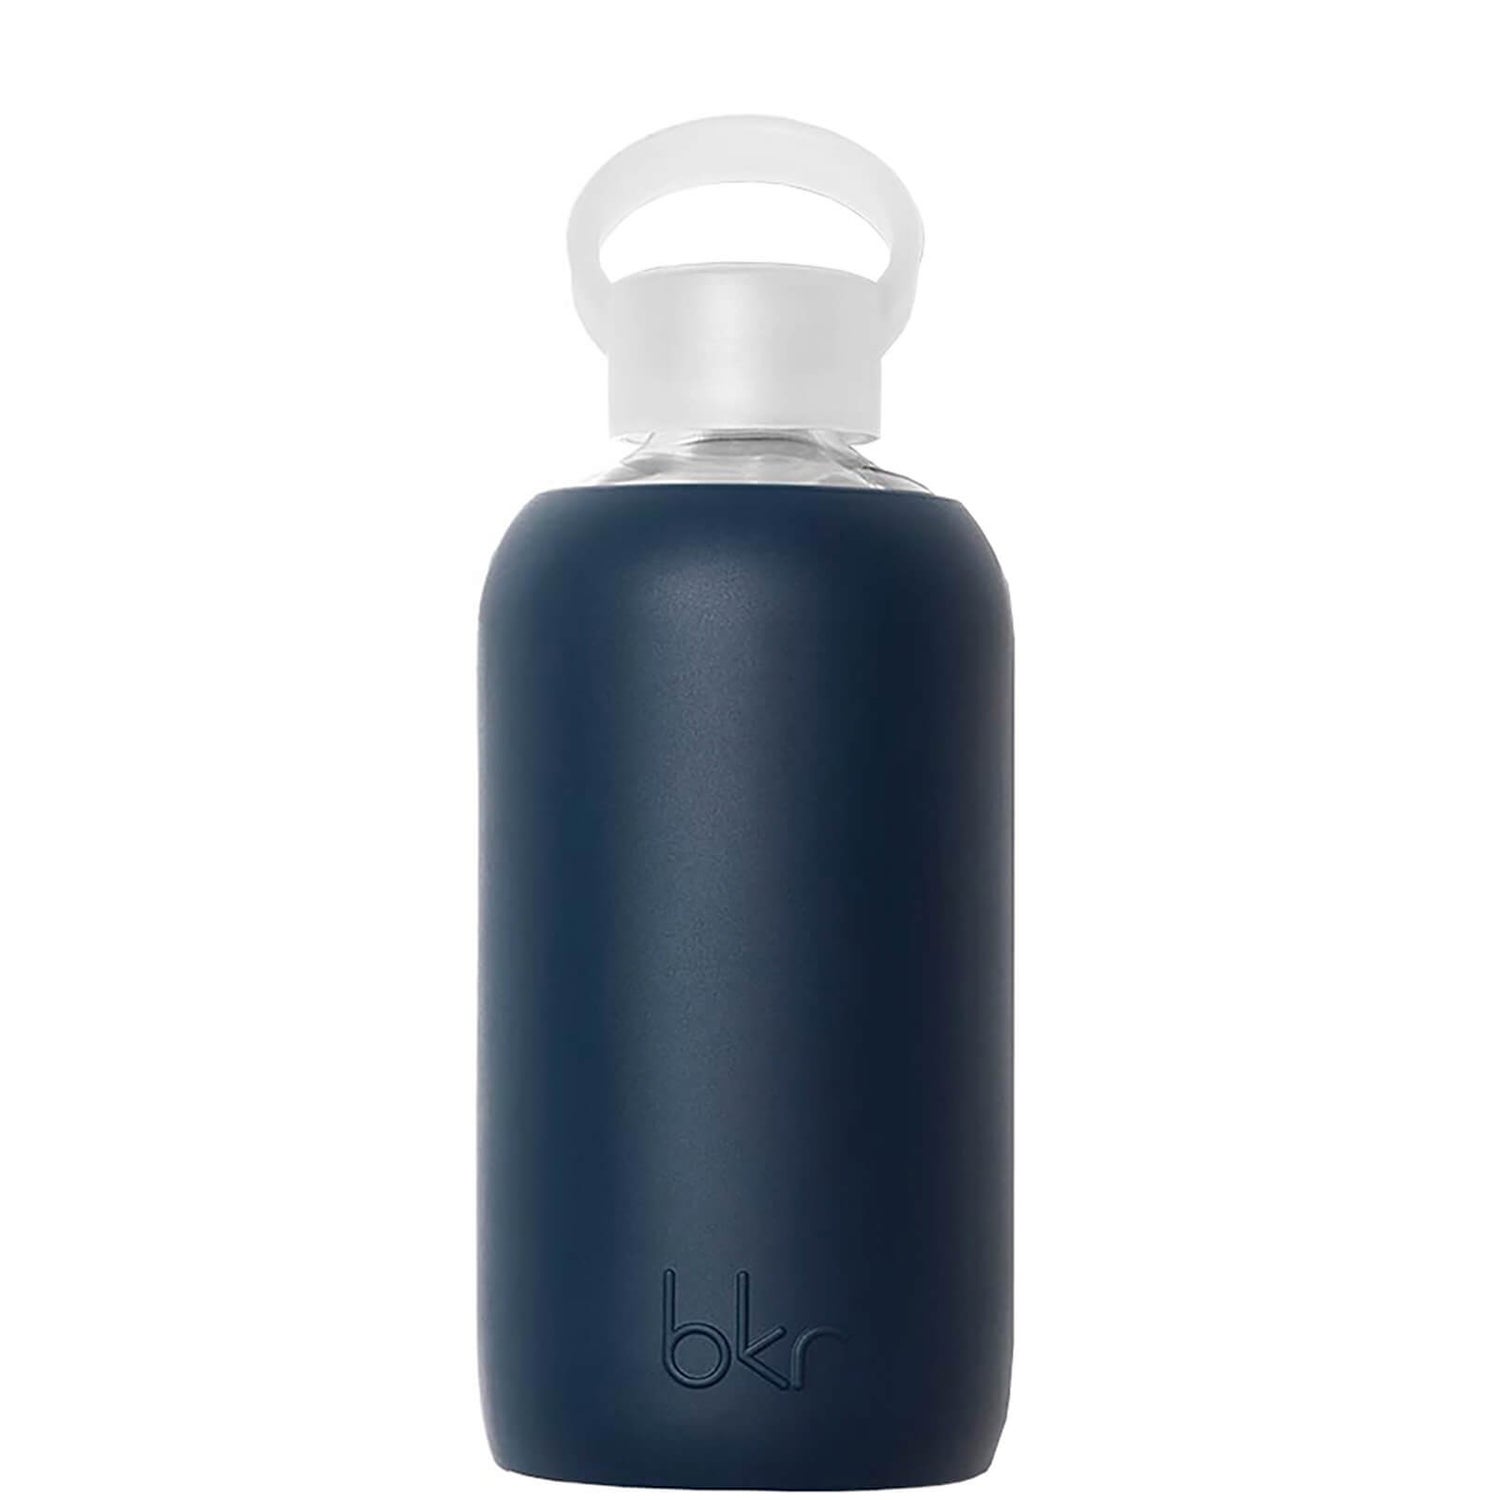 Bkr Ryan Glass Water Bottle